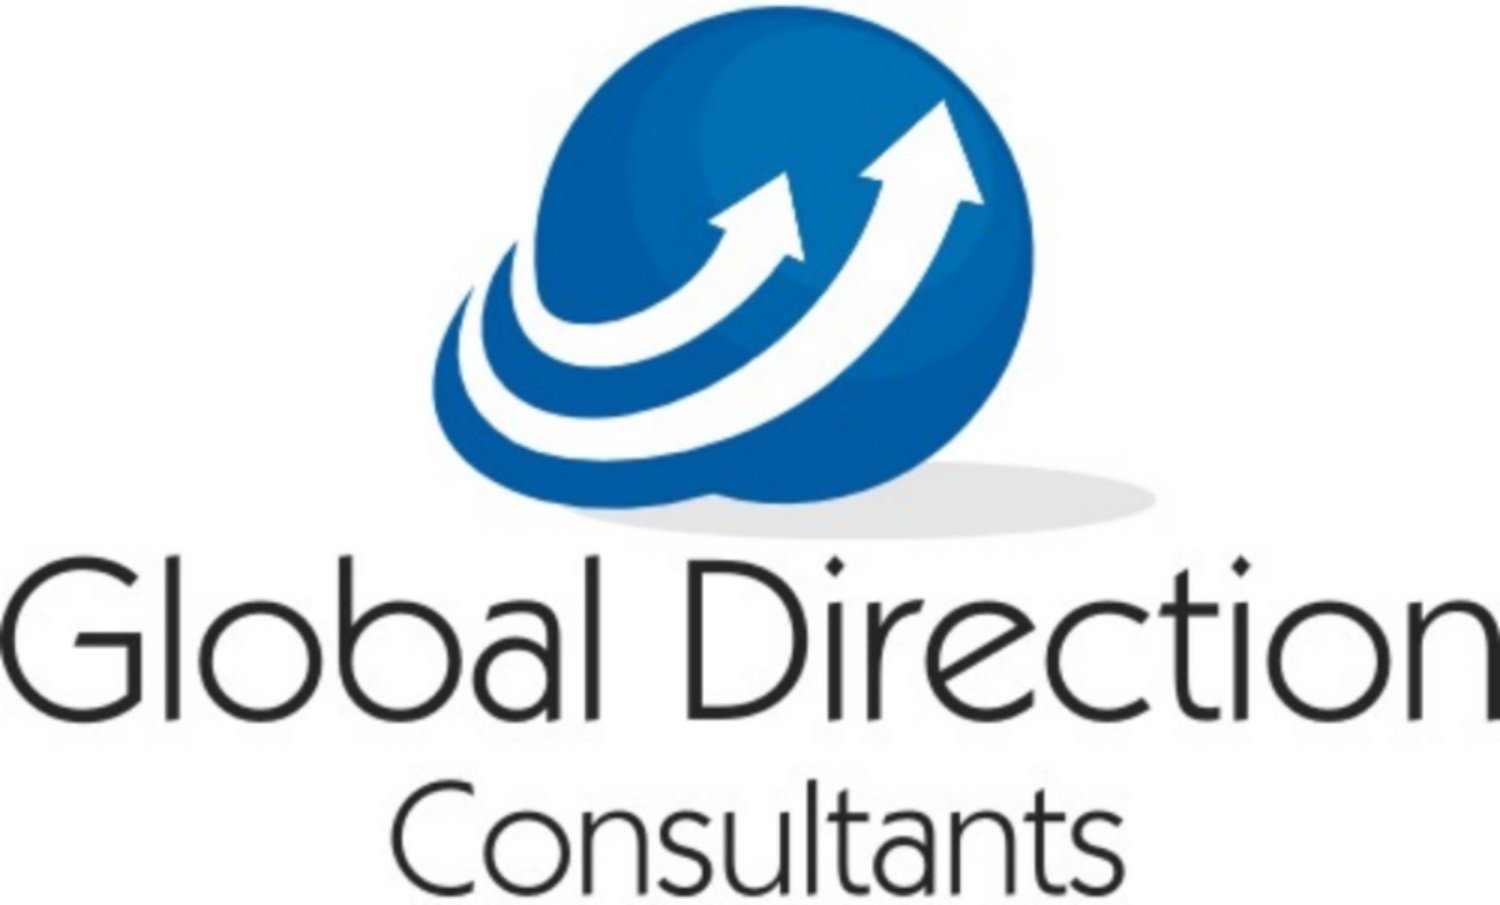 Global Direction Consultants, LLC